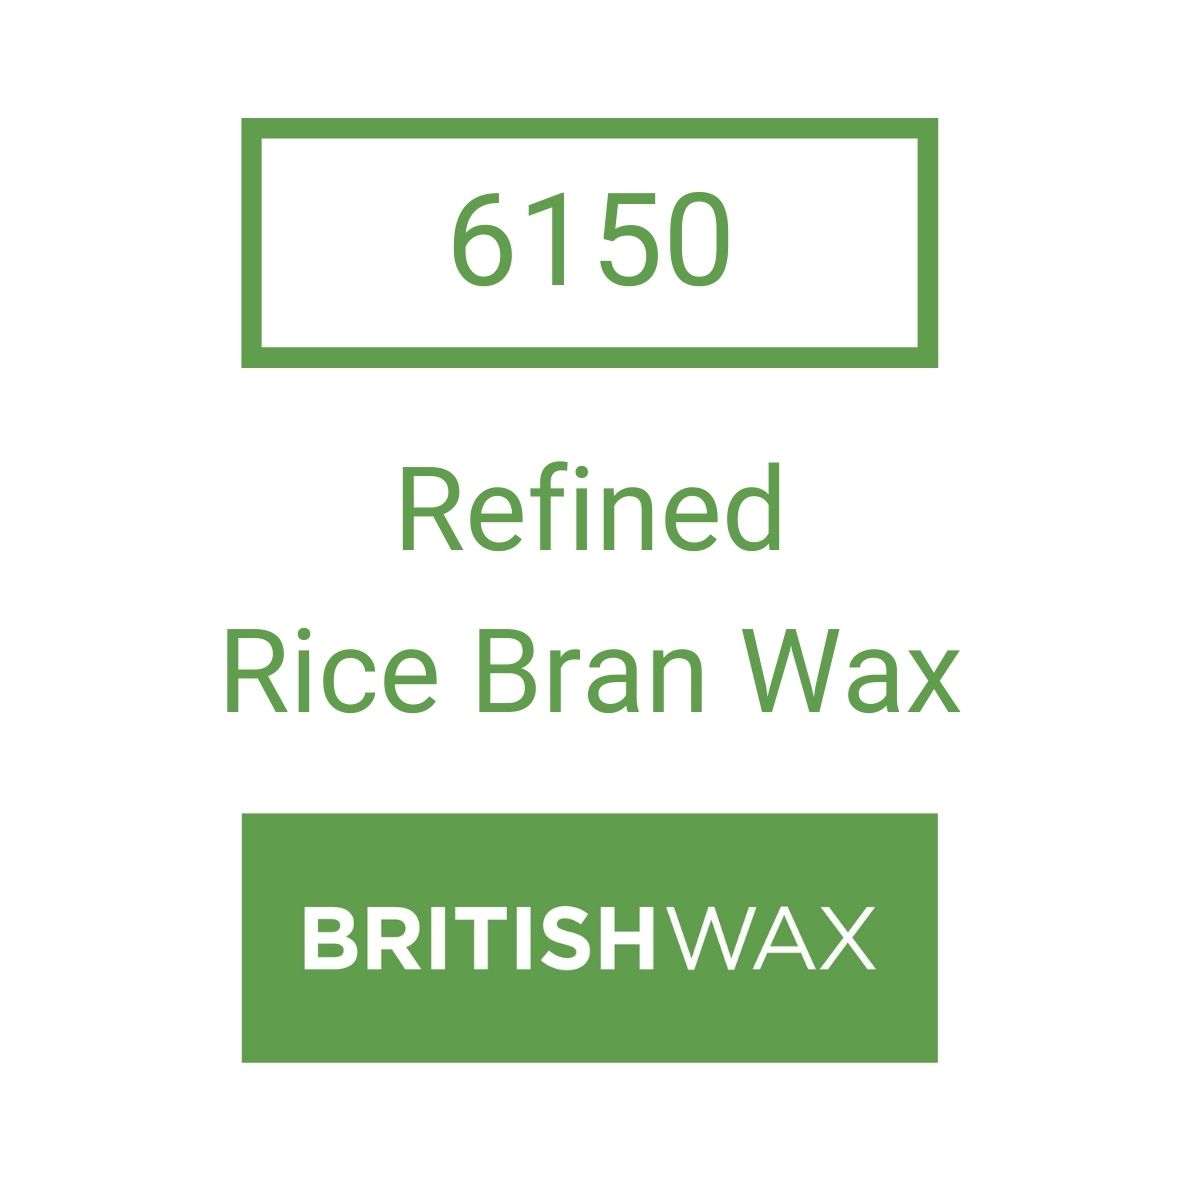 6150 Refined Rice Bran Wax